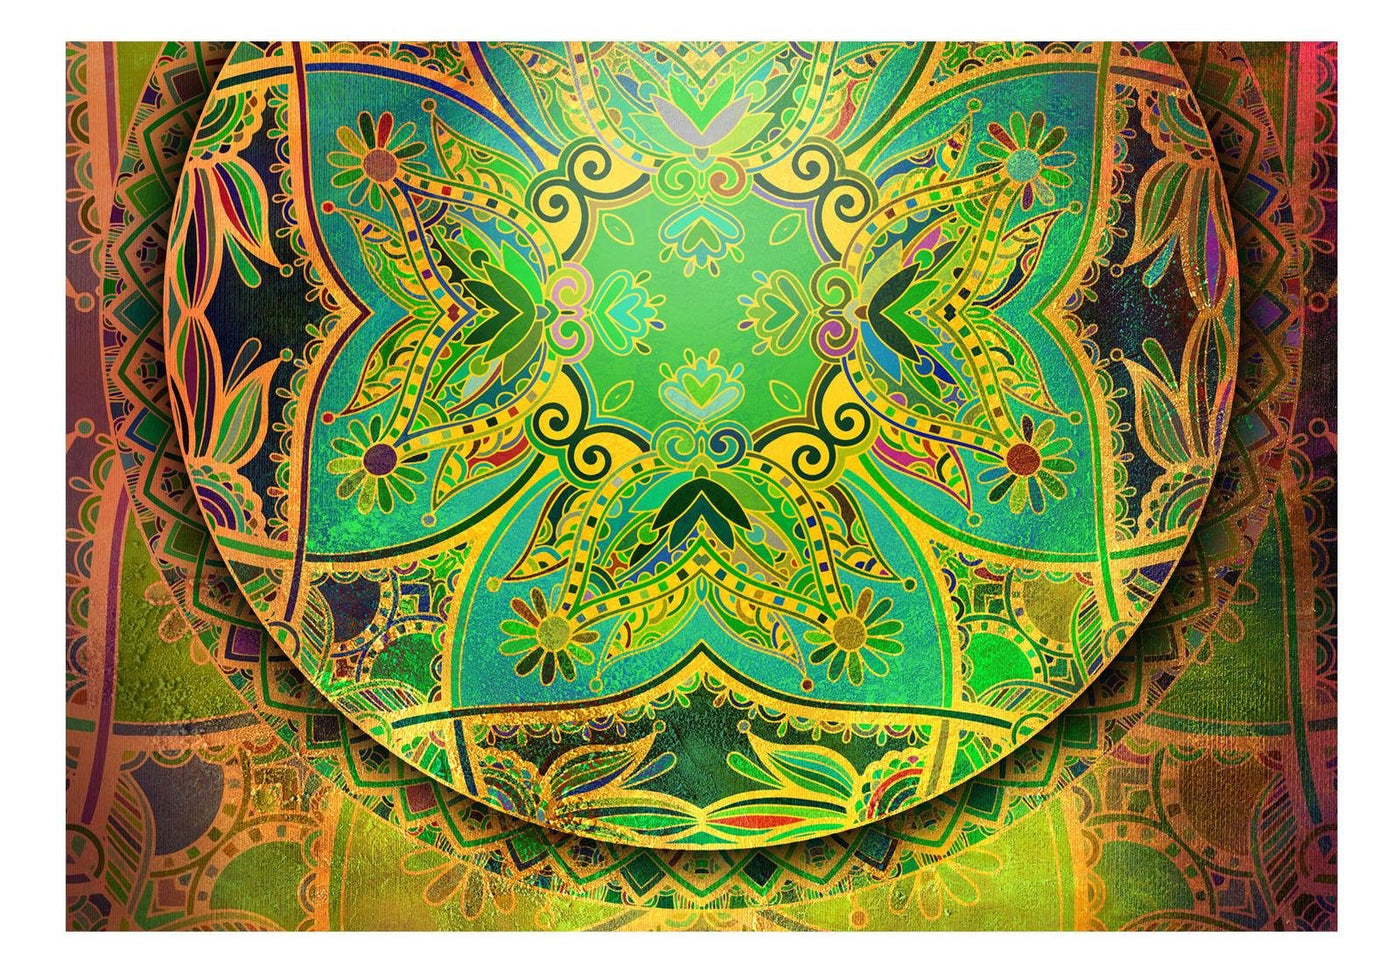 Peel and stick wall mural - Mandala: Emerald Fantasy-TipTopHomeDecor